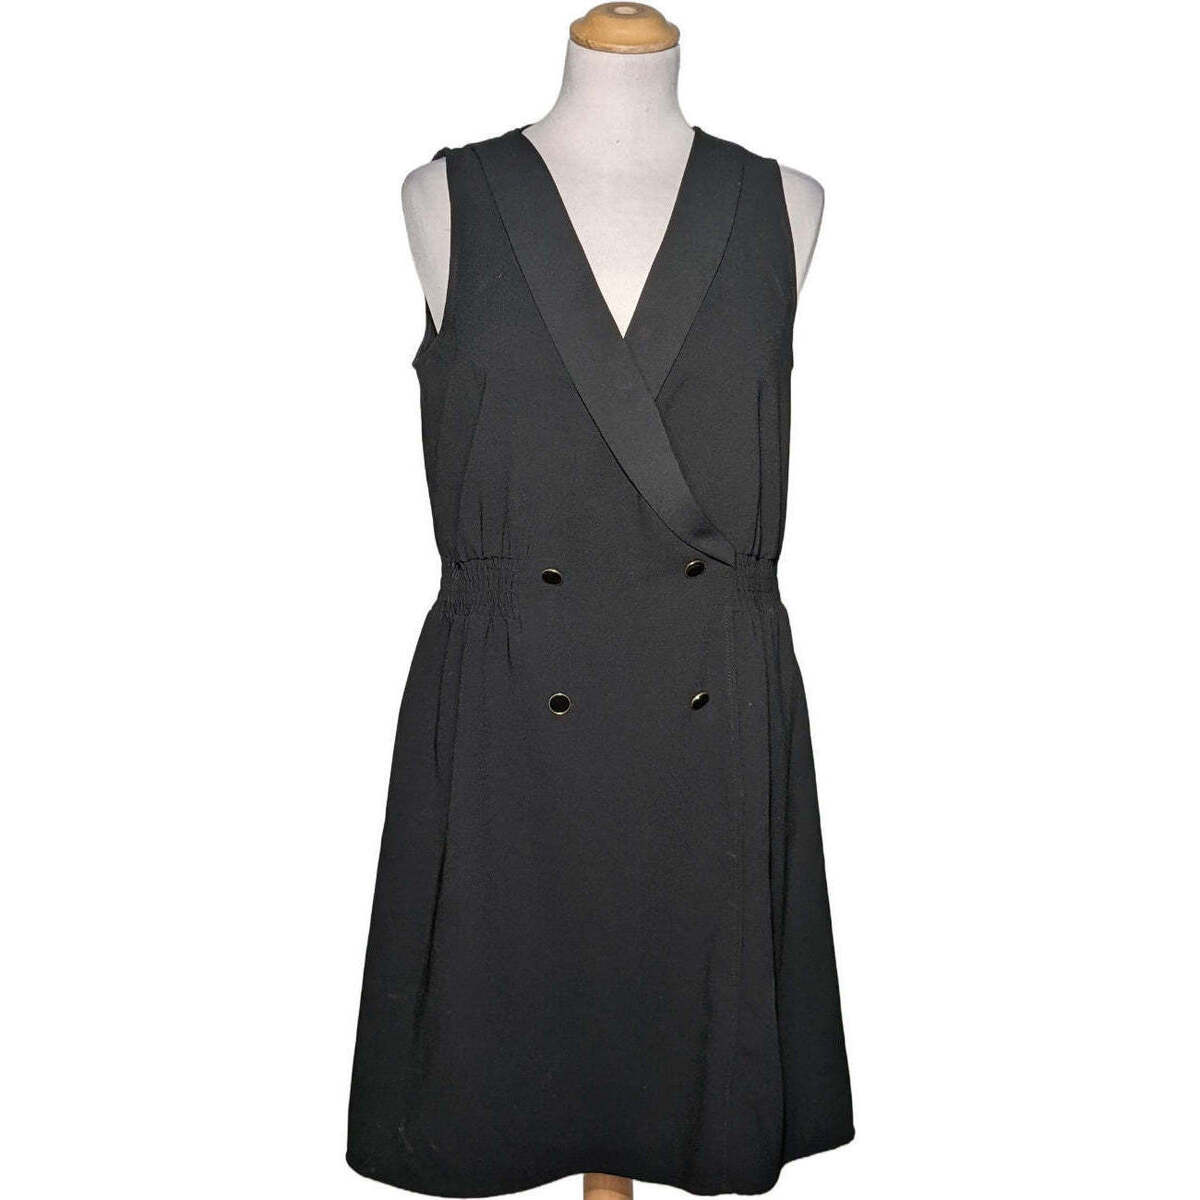 Vêtements Femme Robes courtes Naf Naf robe courte  38 - T2 - M Noir Noir